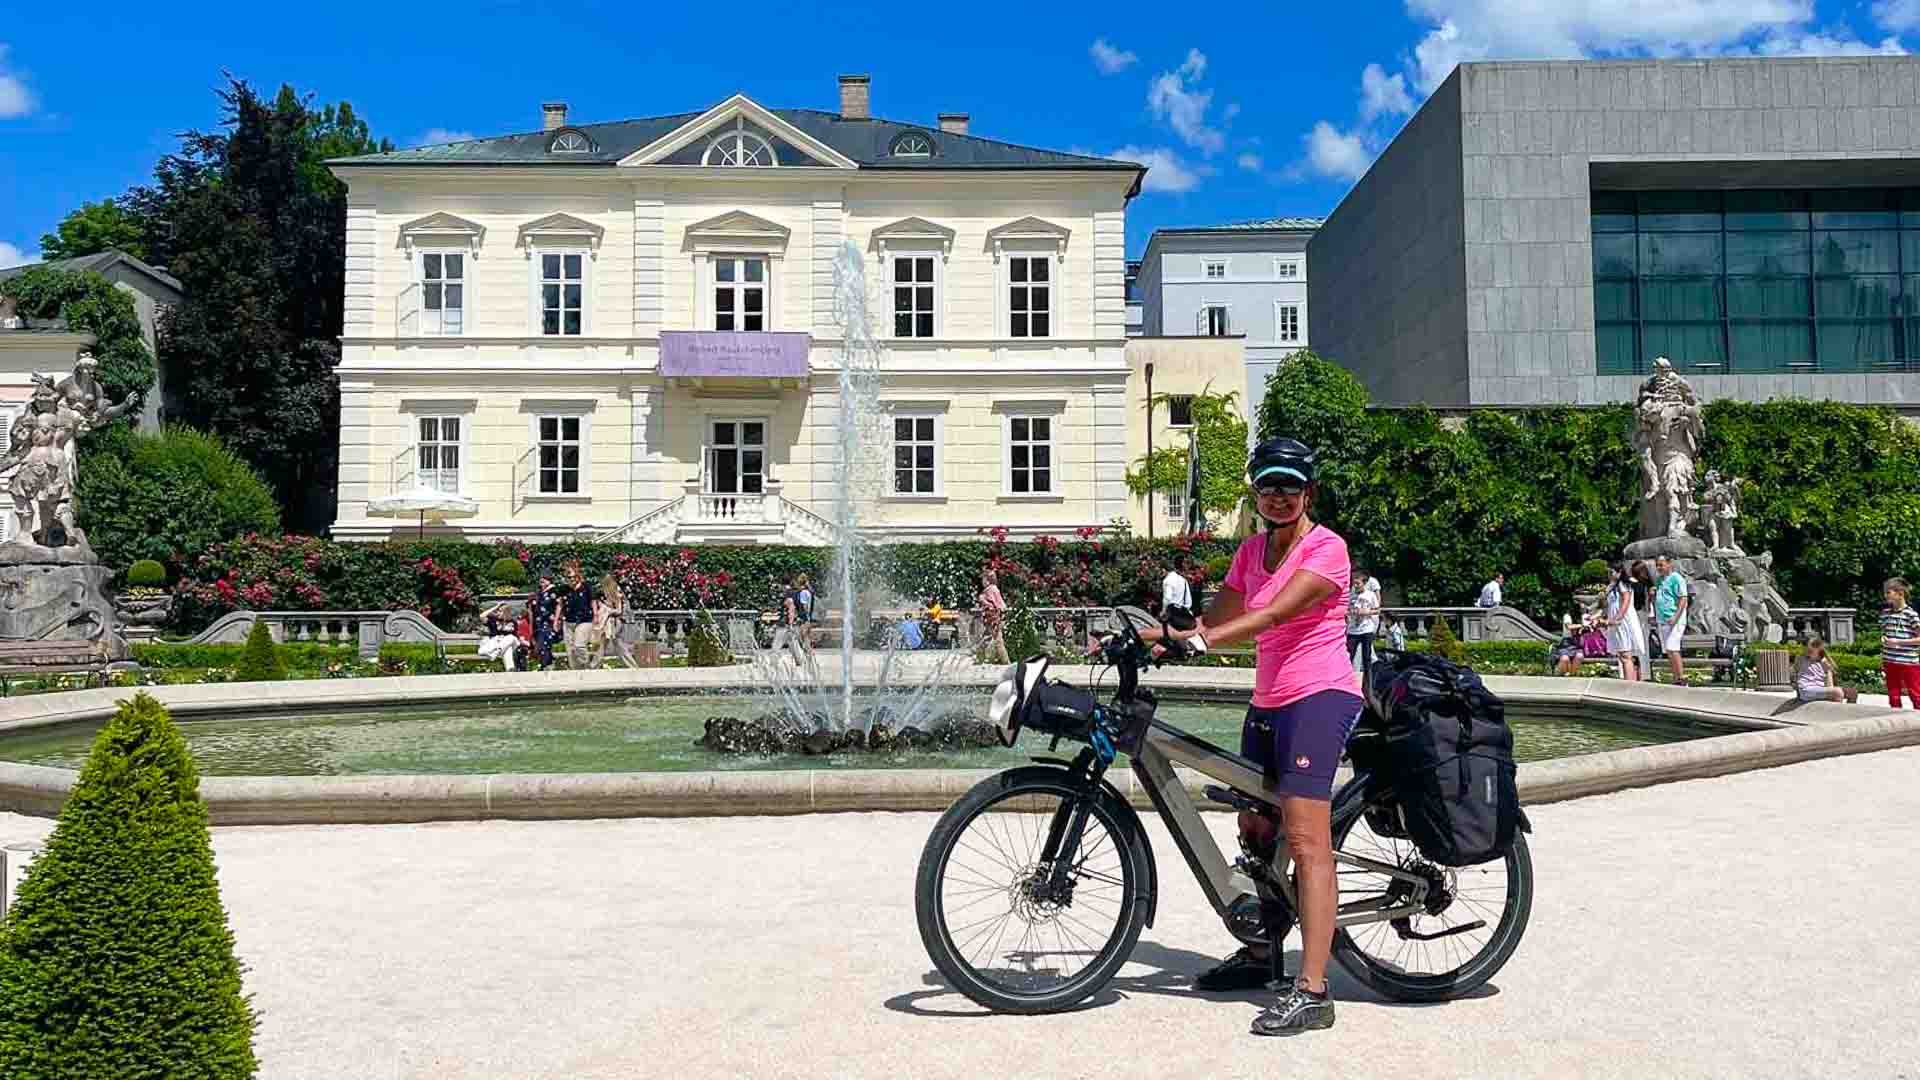 Cyclist outside the Mirabellgarten in Salzburg